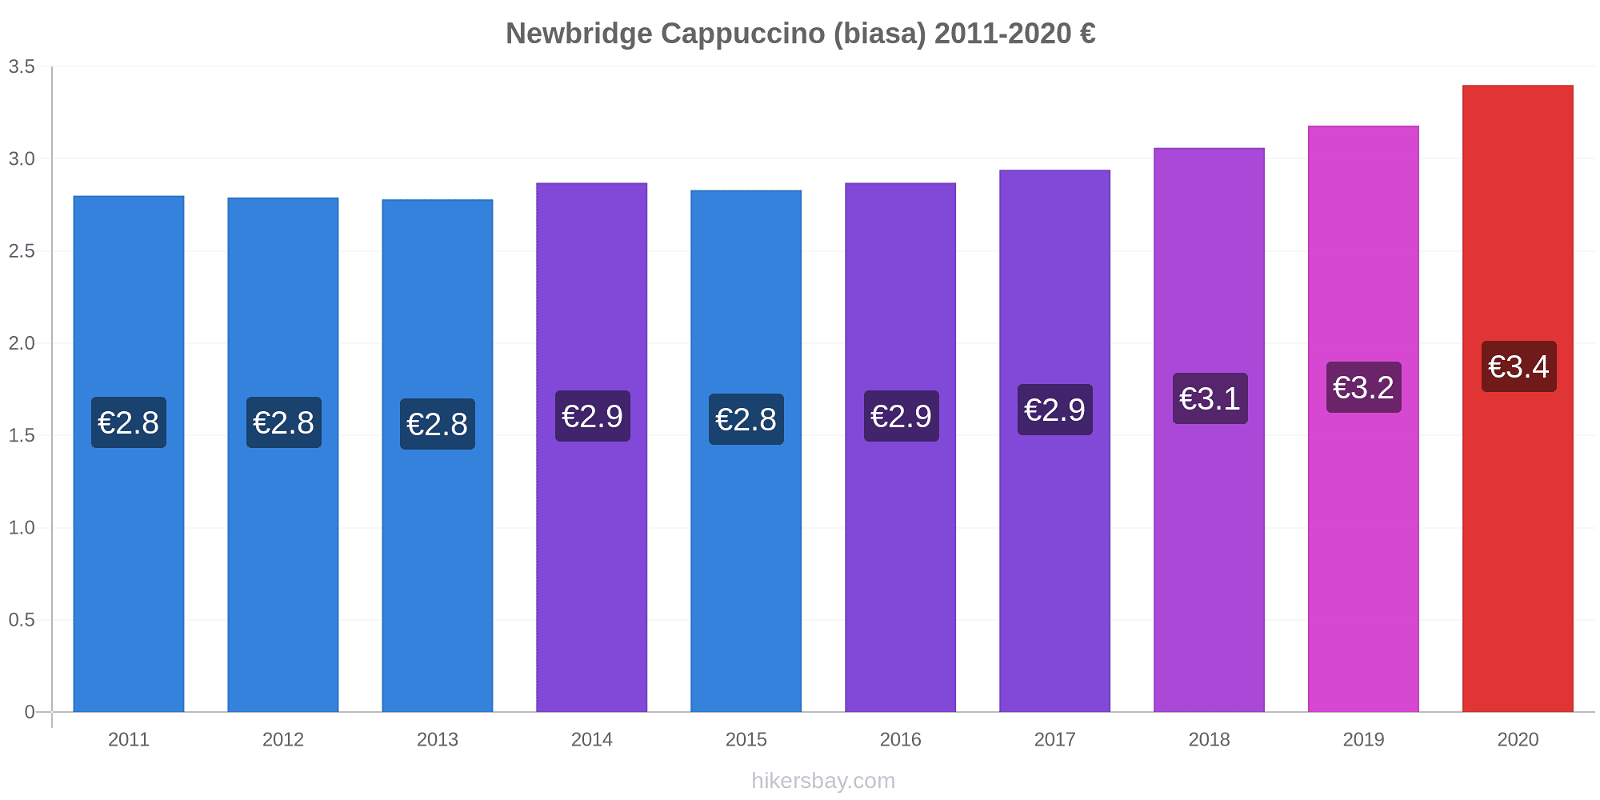 Newbridge perubahan harga Cappuccino (biasa) hikersbay.com